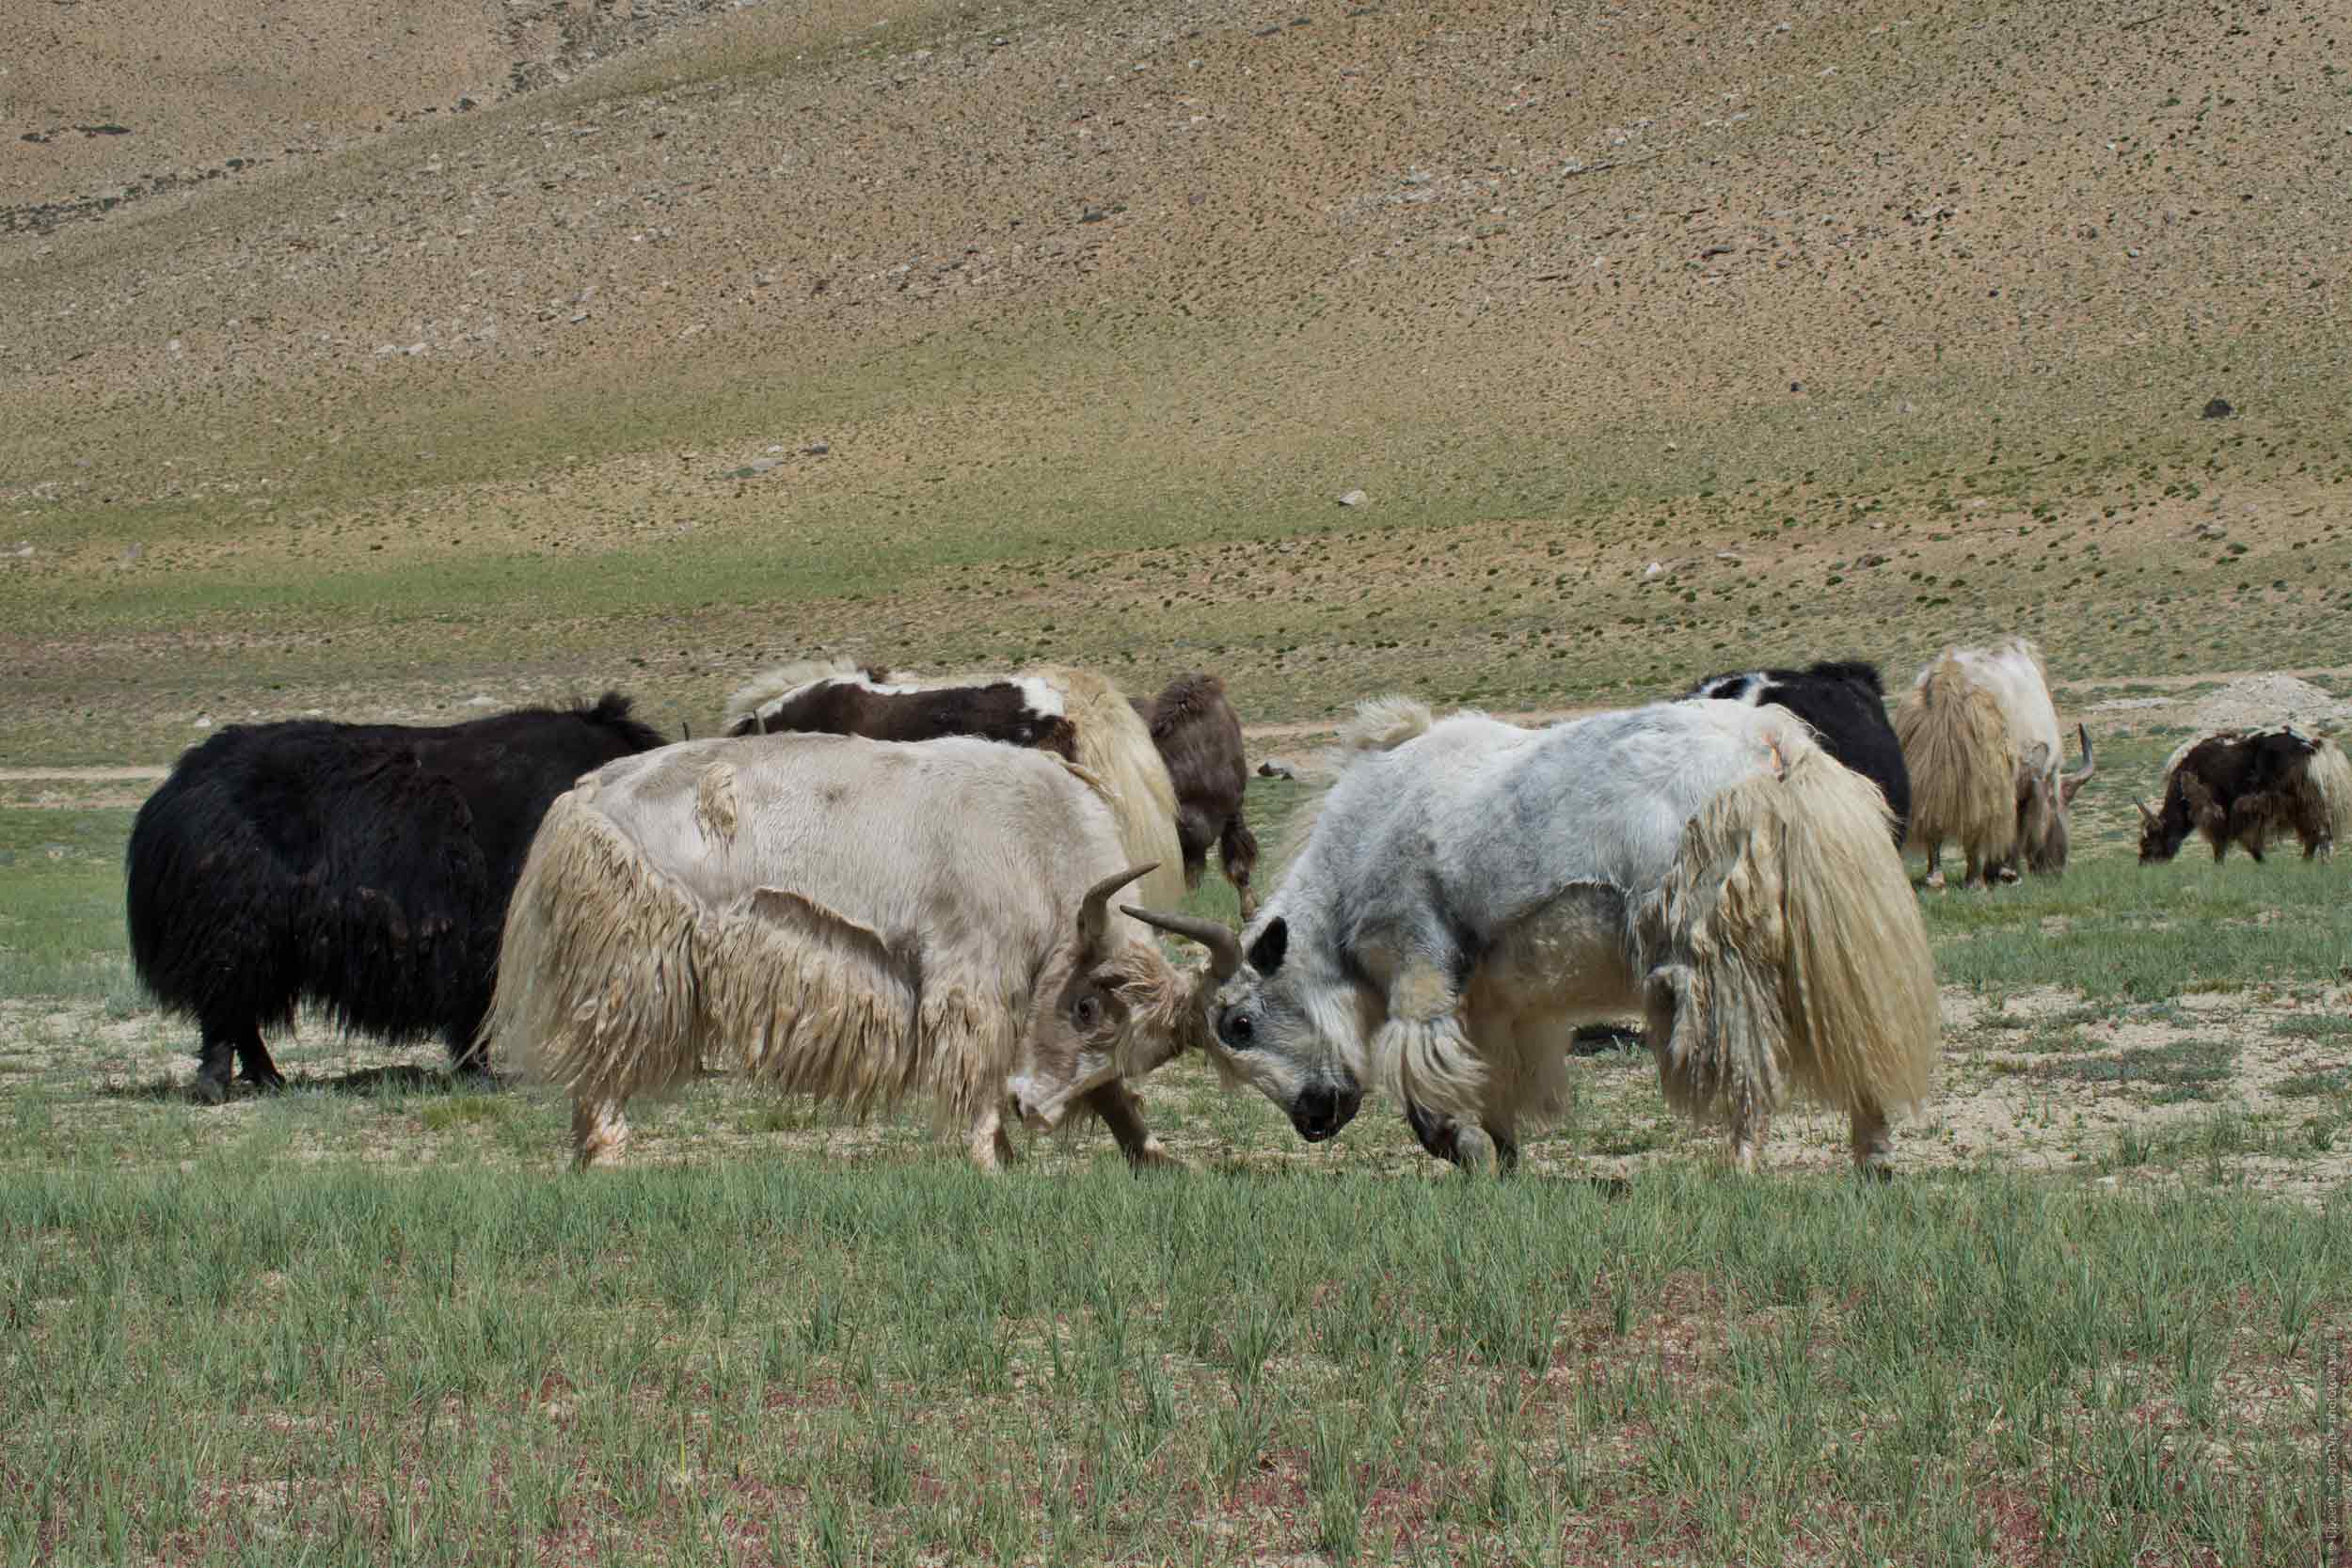 Tibetan yaks of the nomads Chong Pa, Ladakh women’s tour, August 31 - September 14, 2019.